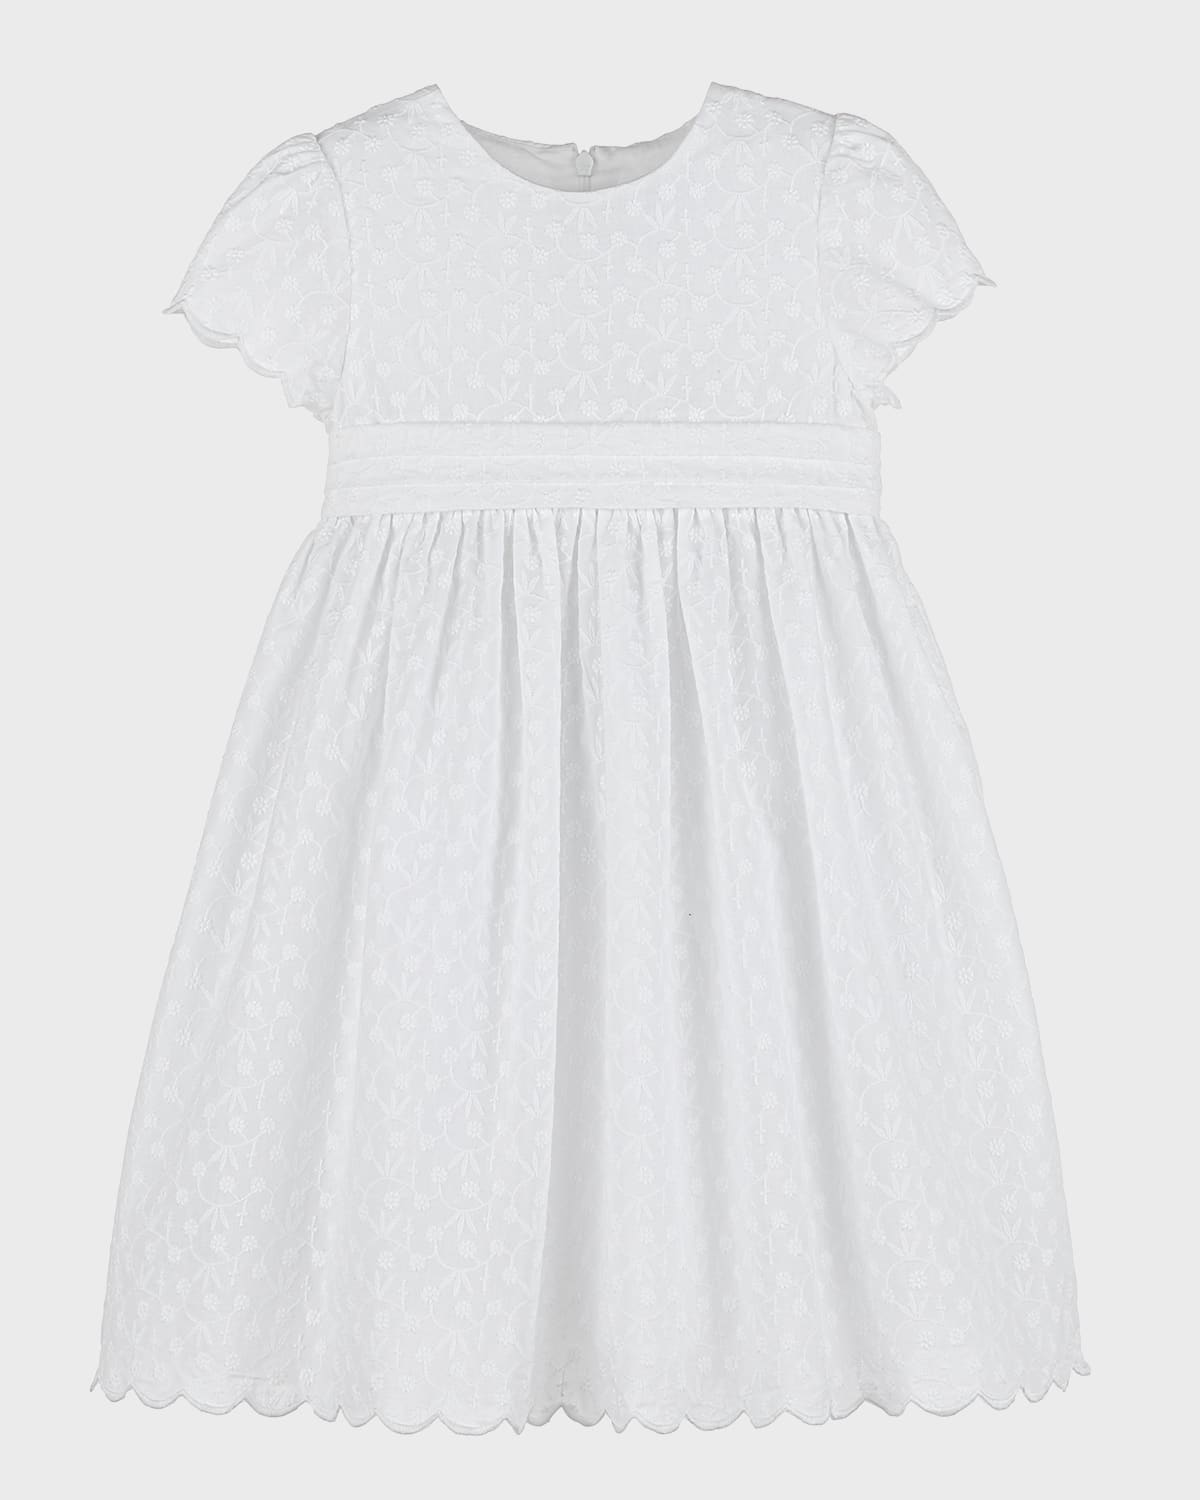 Luli & Me Kids' Girl's White Embroidered Float Dress